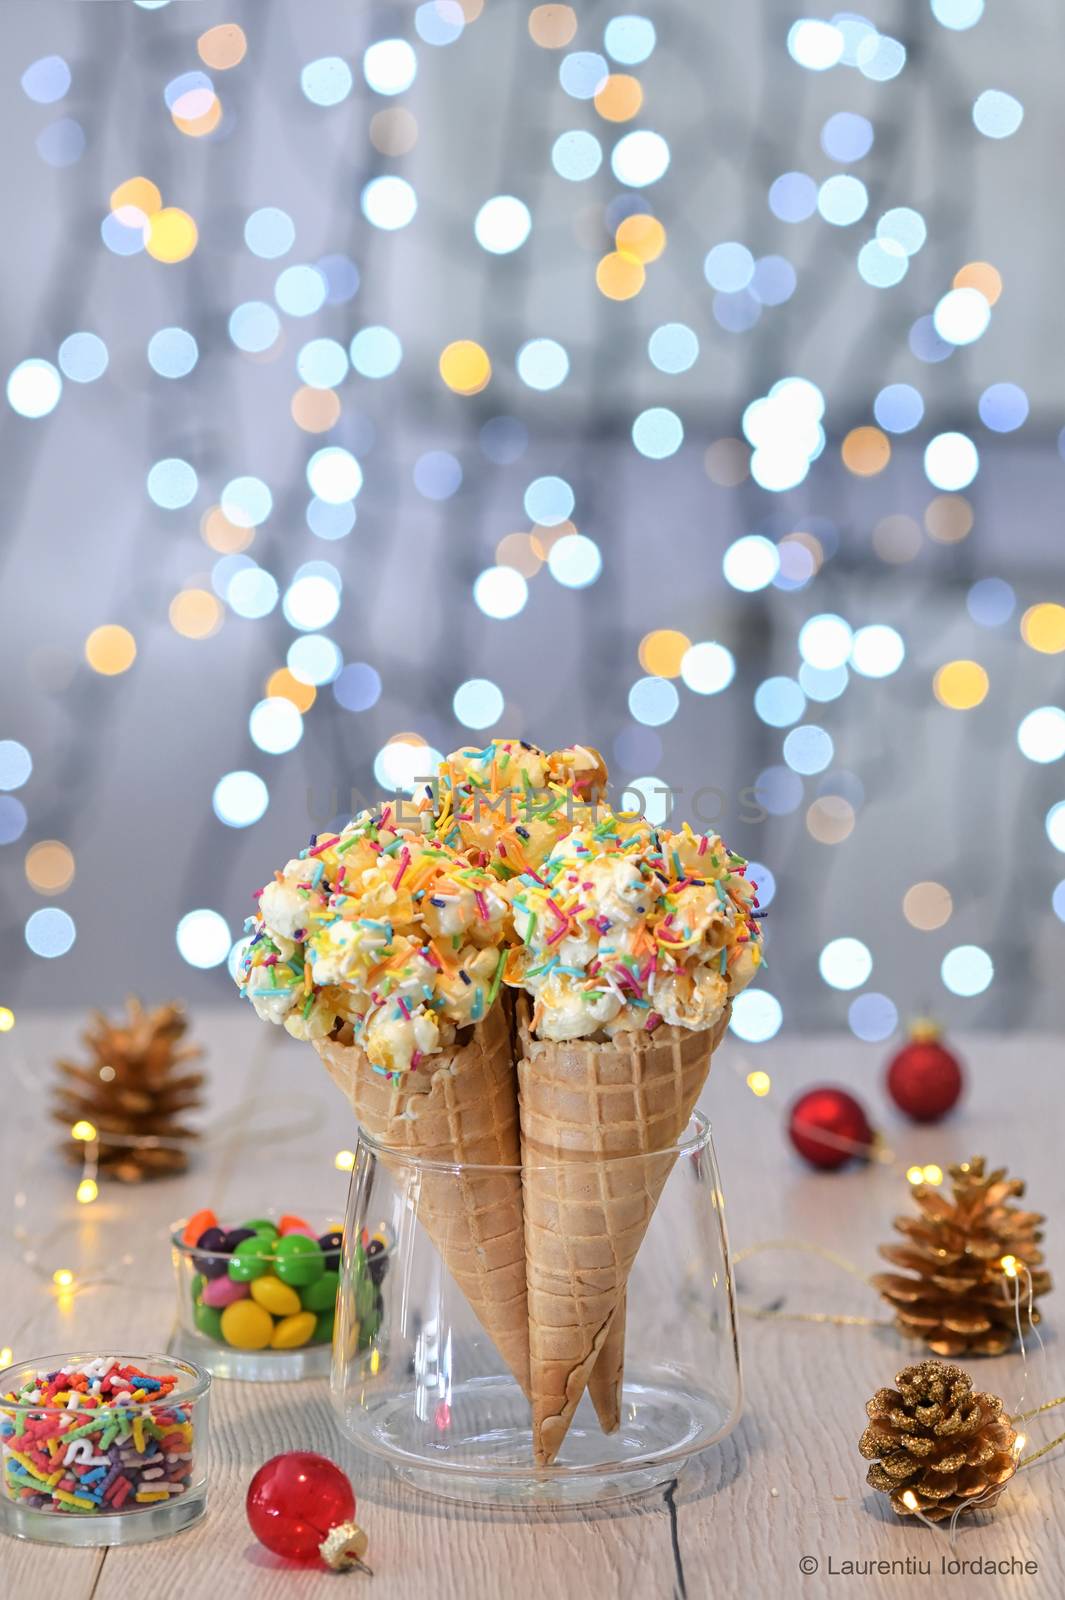 Popcorn Ball Ice Cream Cones and Lights